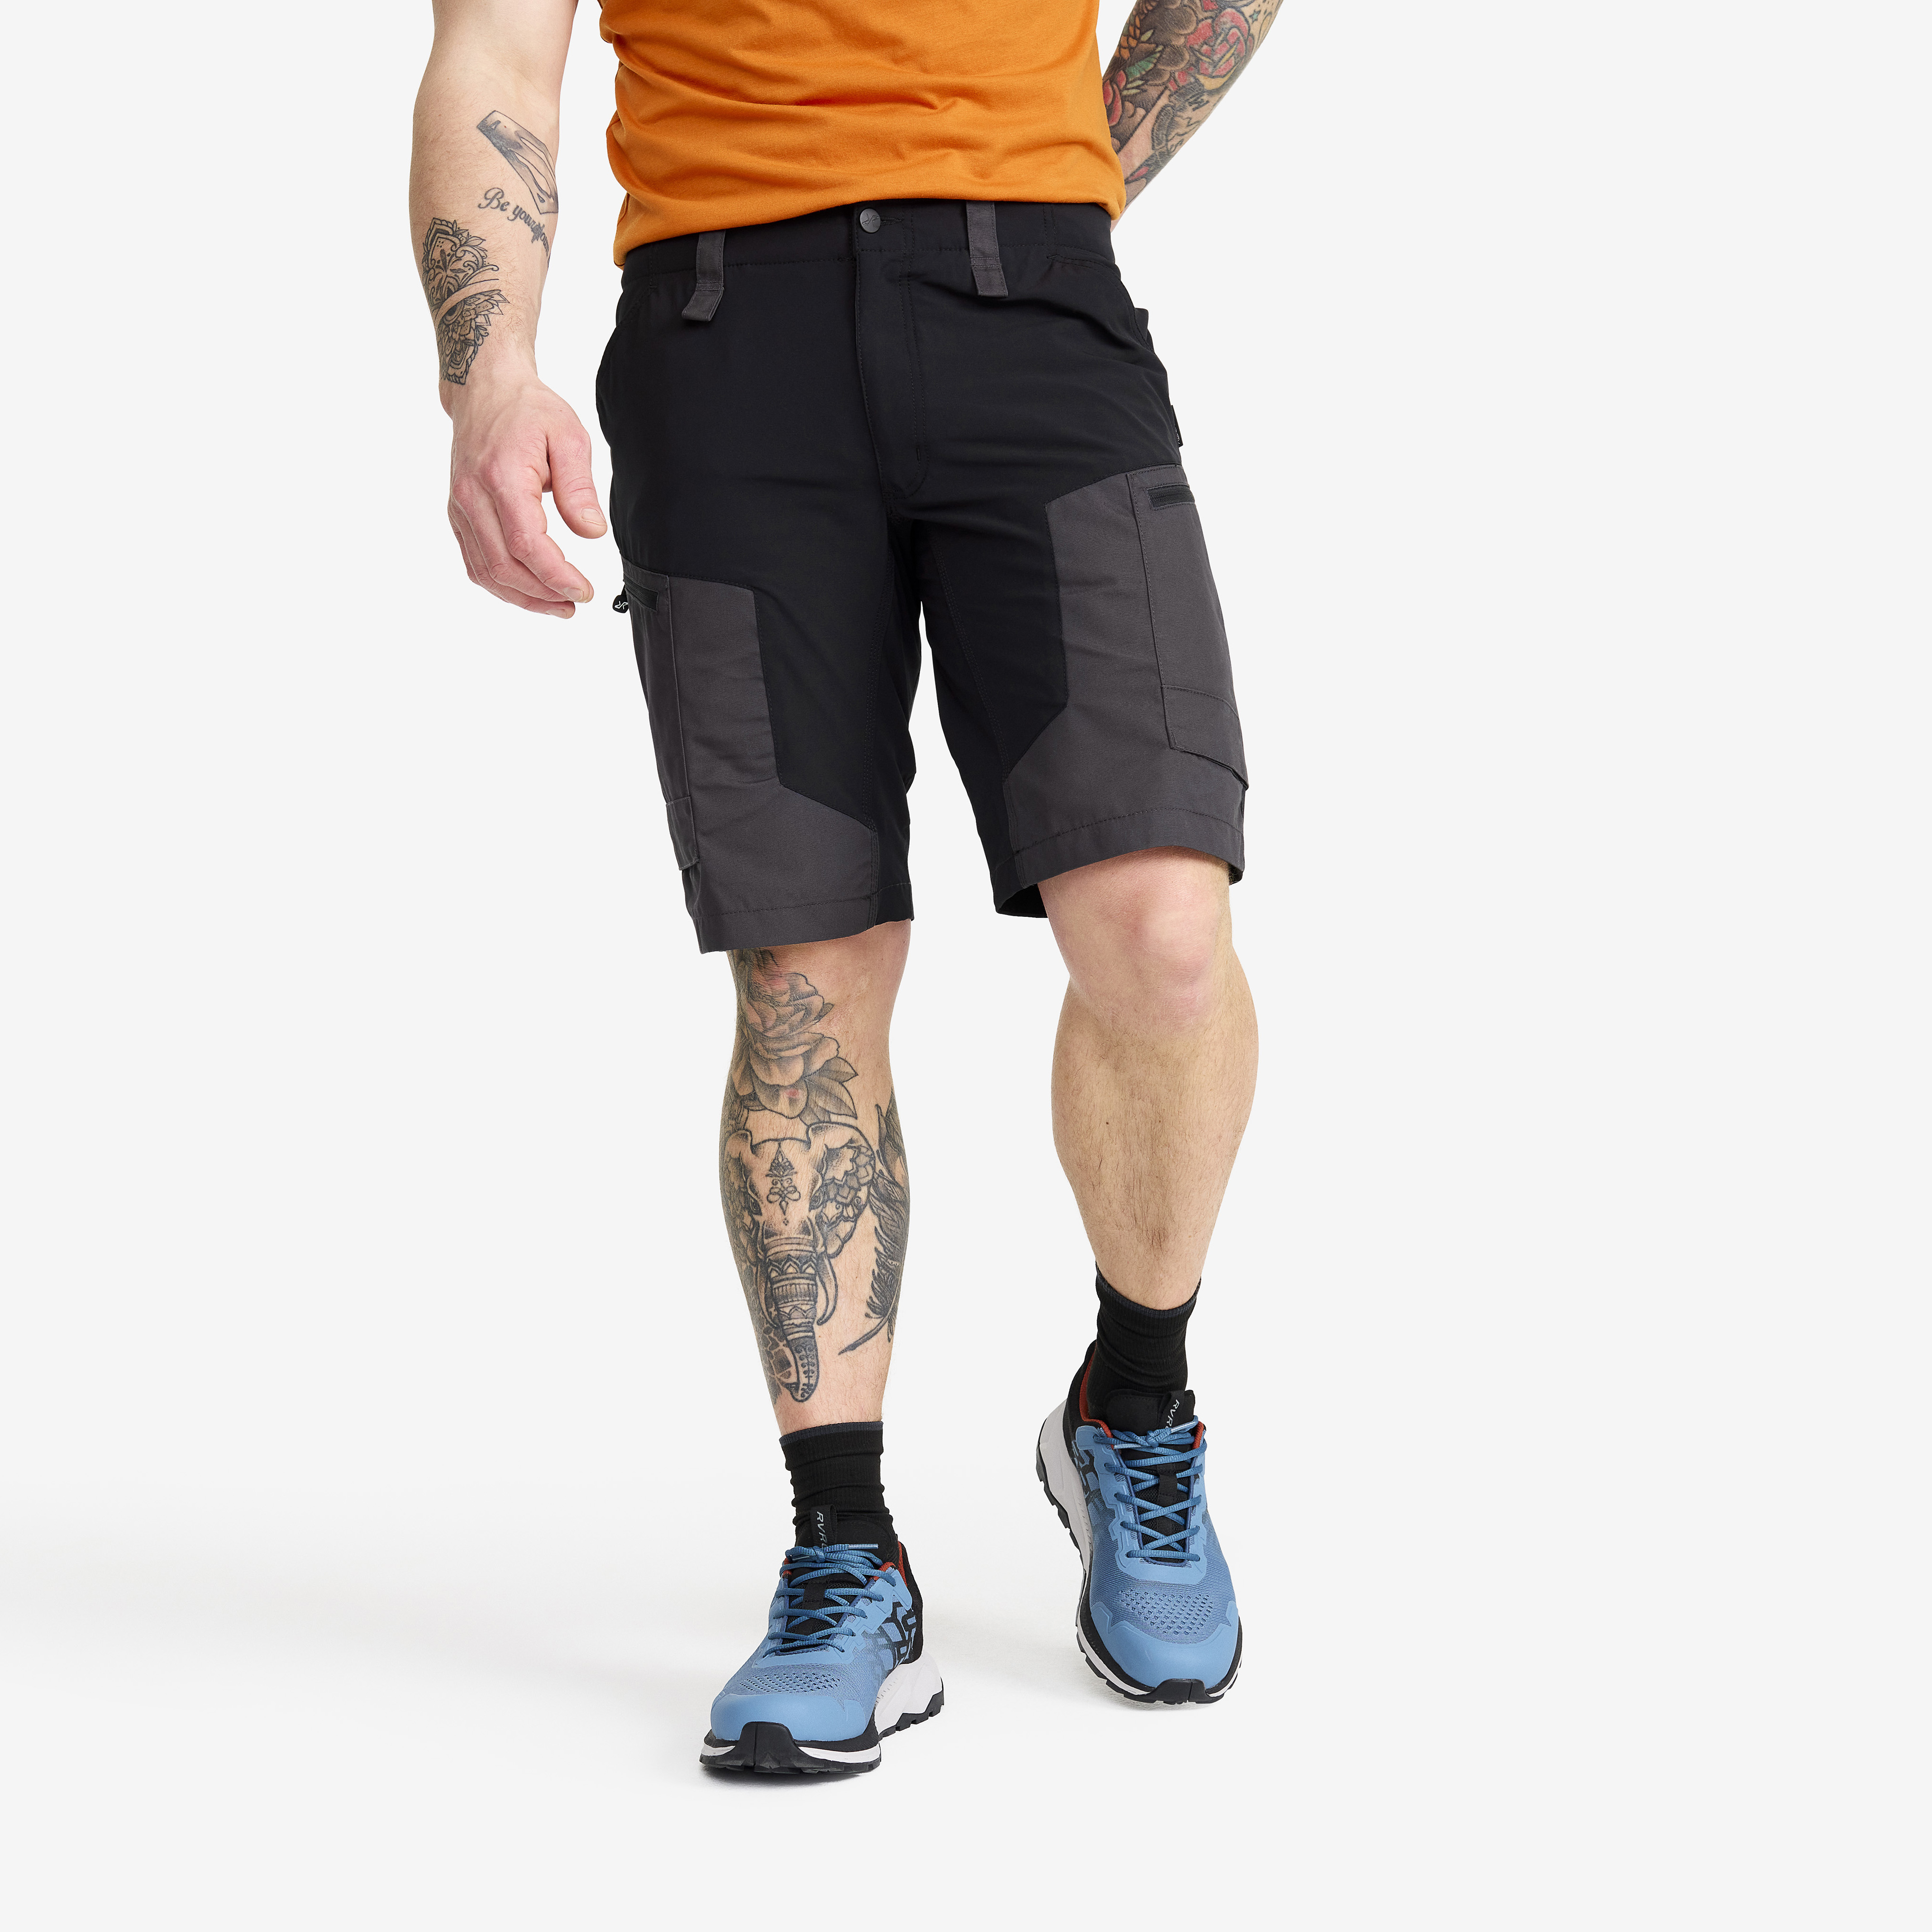 RVRC GP shorts for men in black